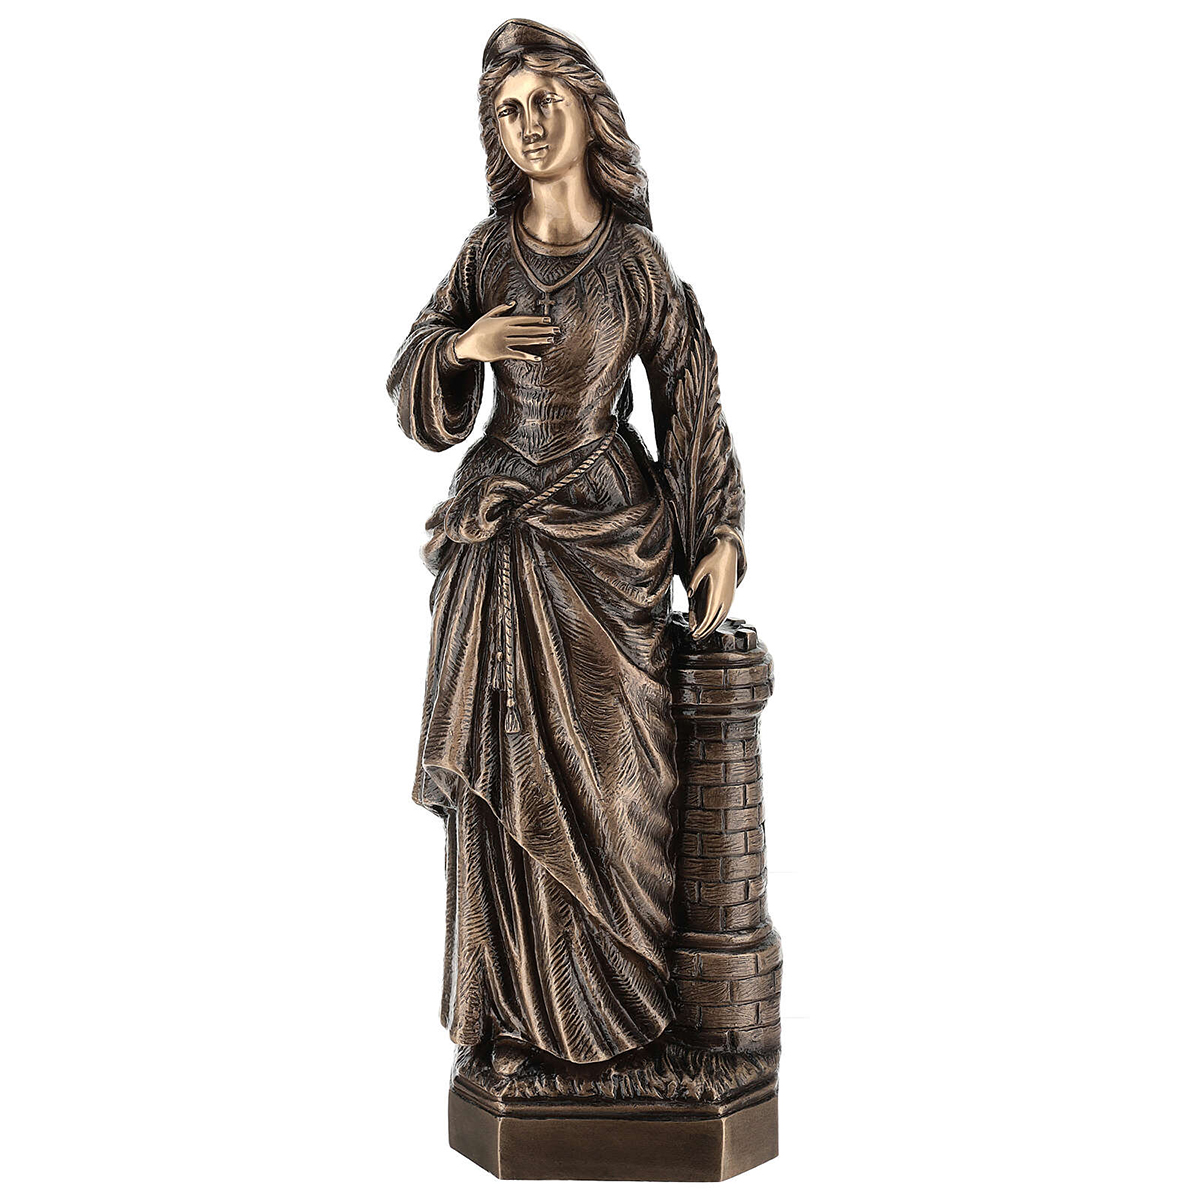 Saint Barbara Statue for Sale